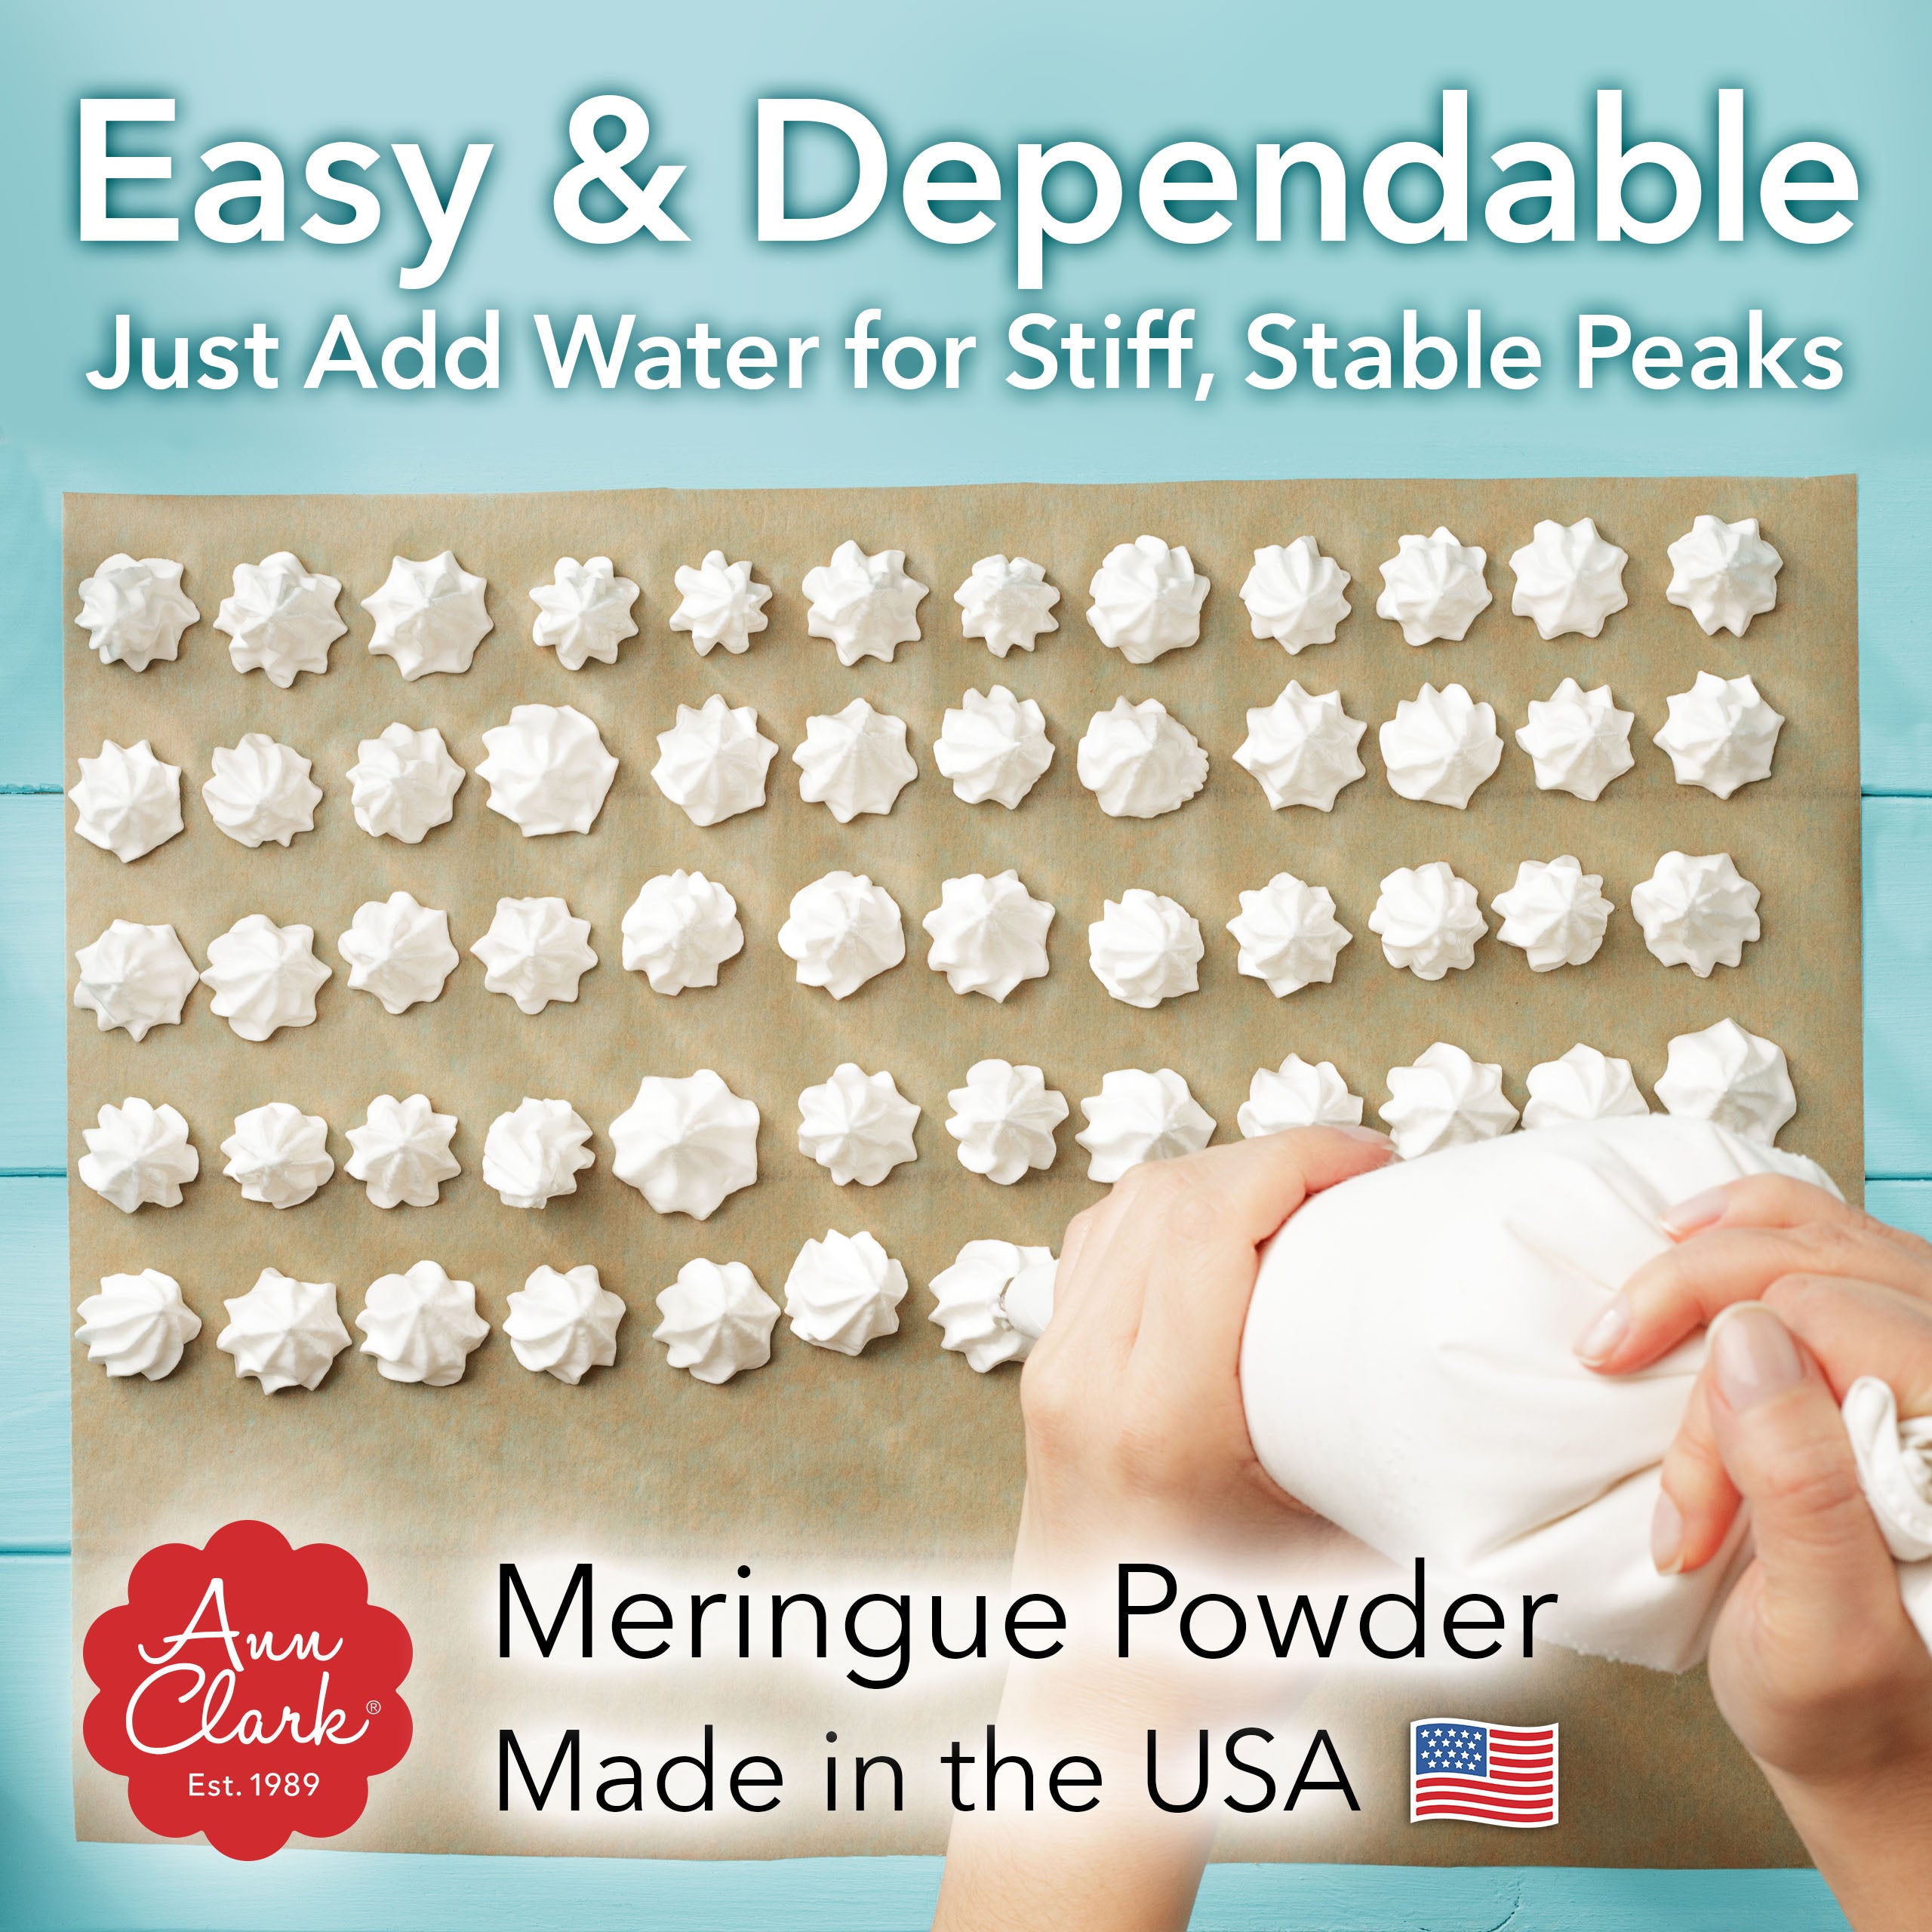 Ann Clark Premium Meringue Powder,  2 lb